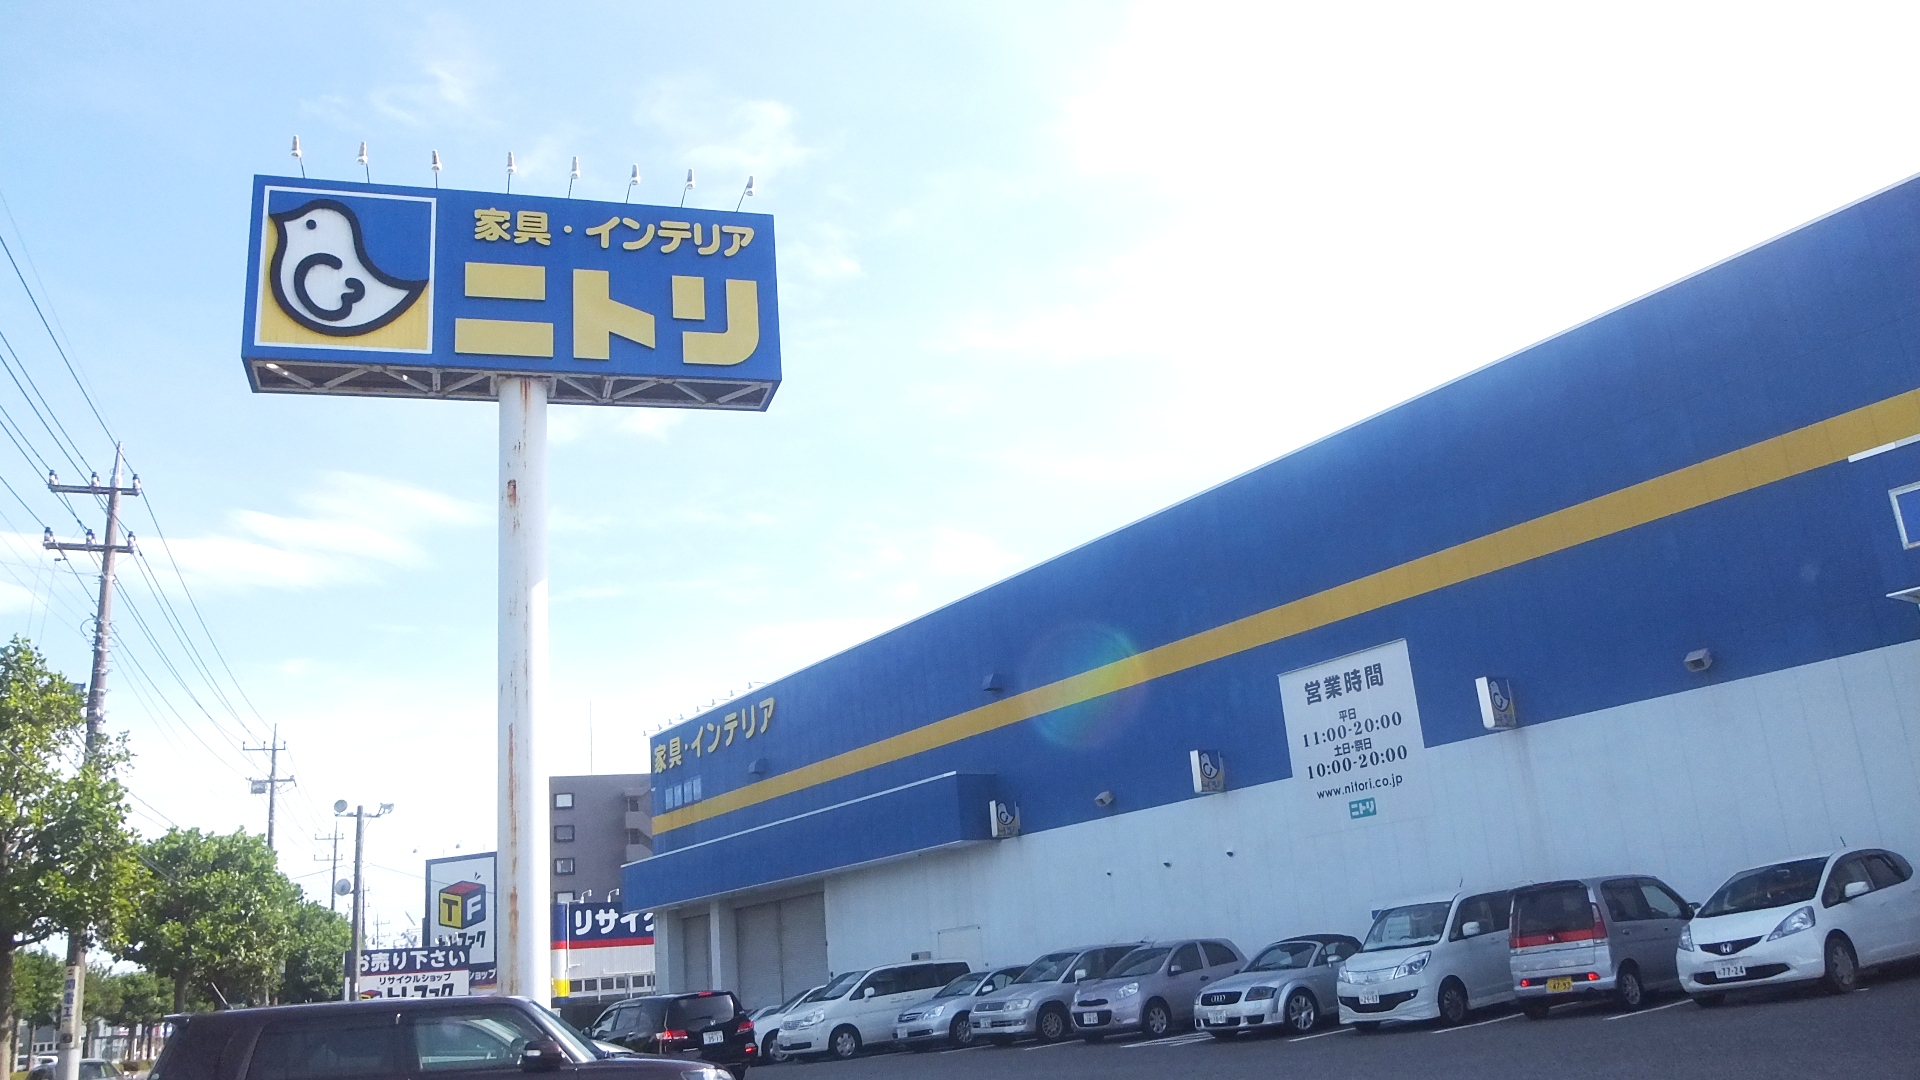 Home center. 625m to Nitori Ushiku store (hardware store)